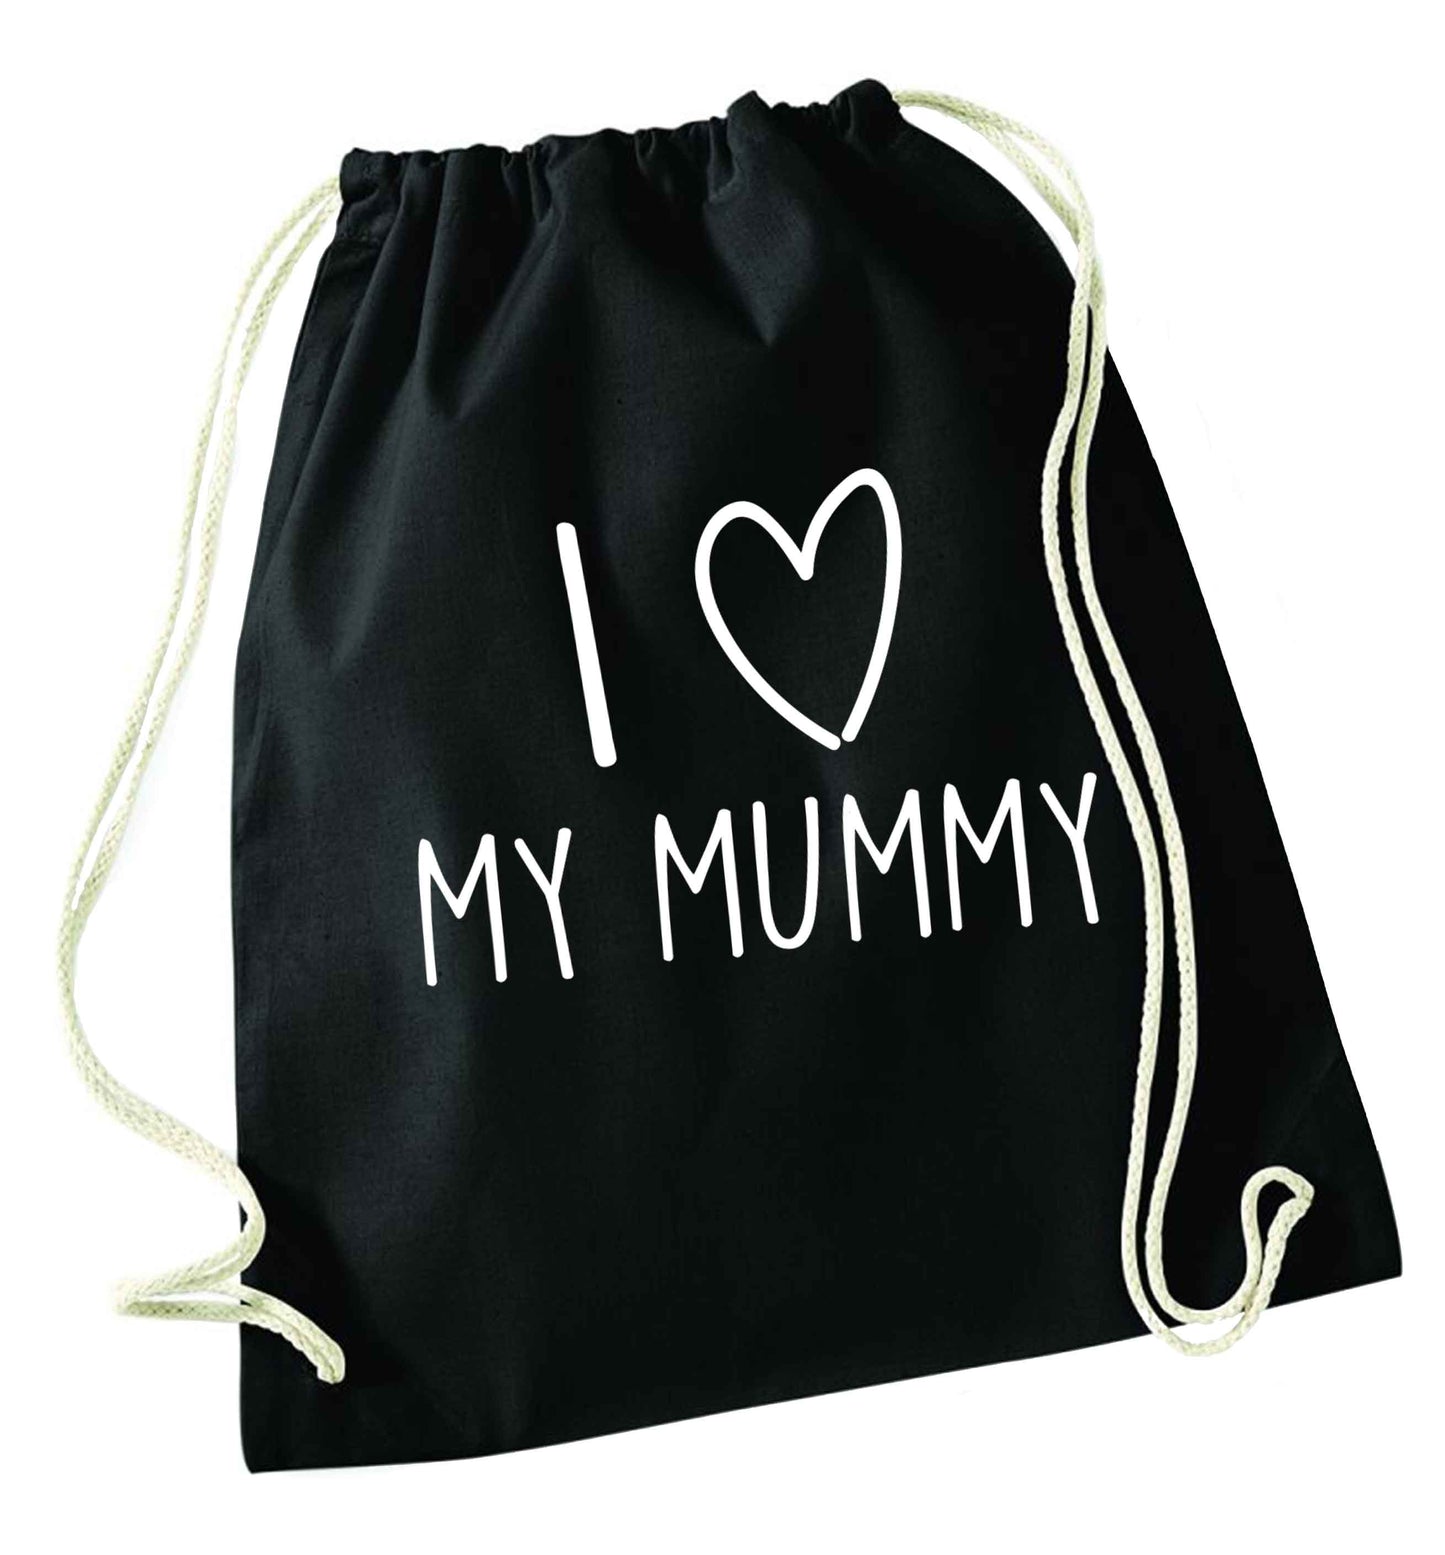 I love my mummy black drawstring bag